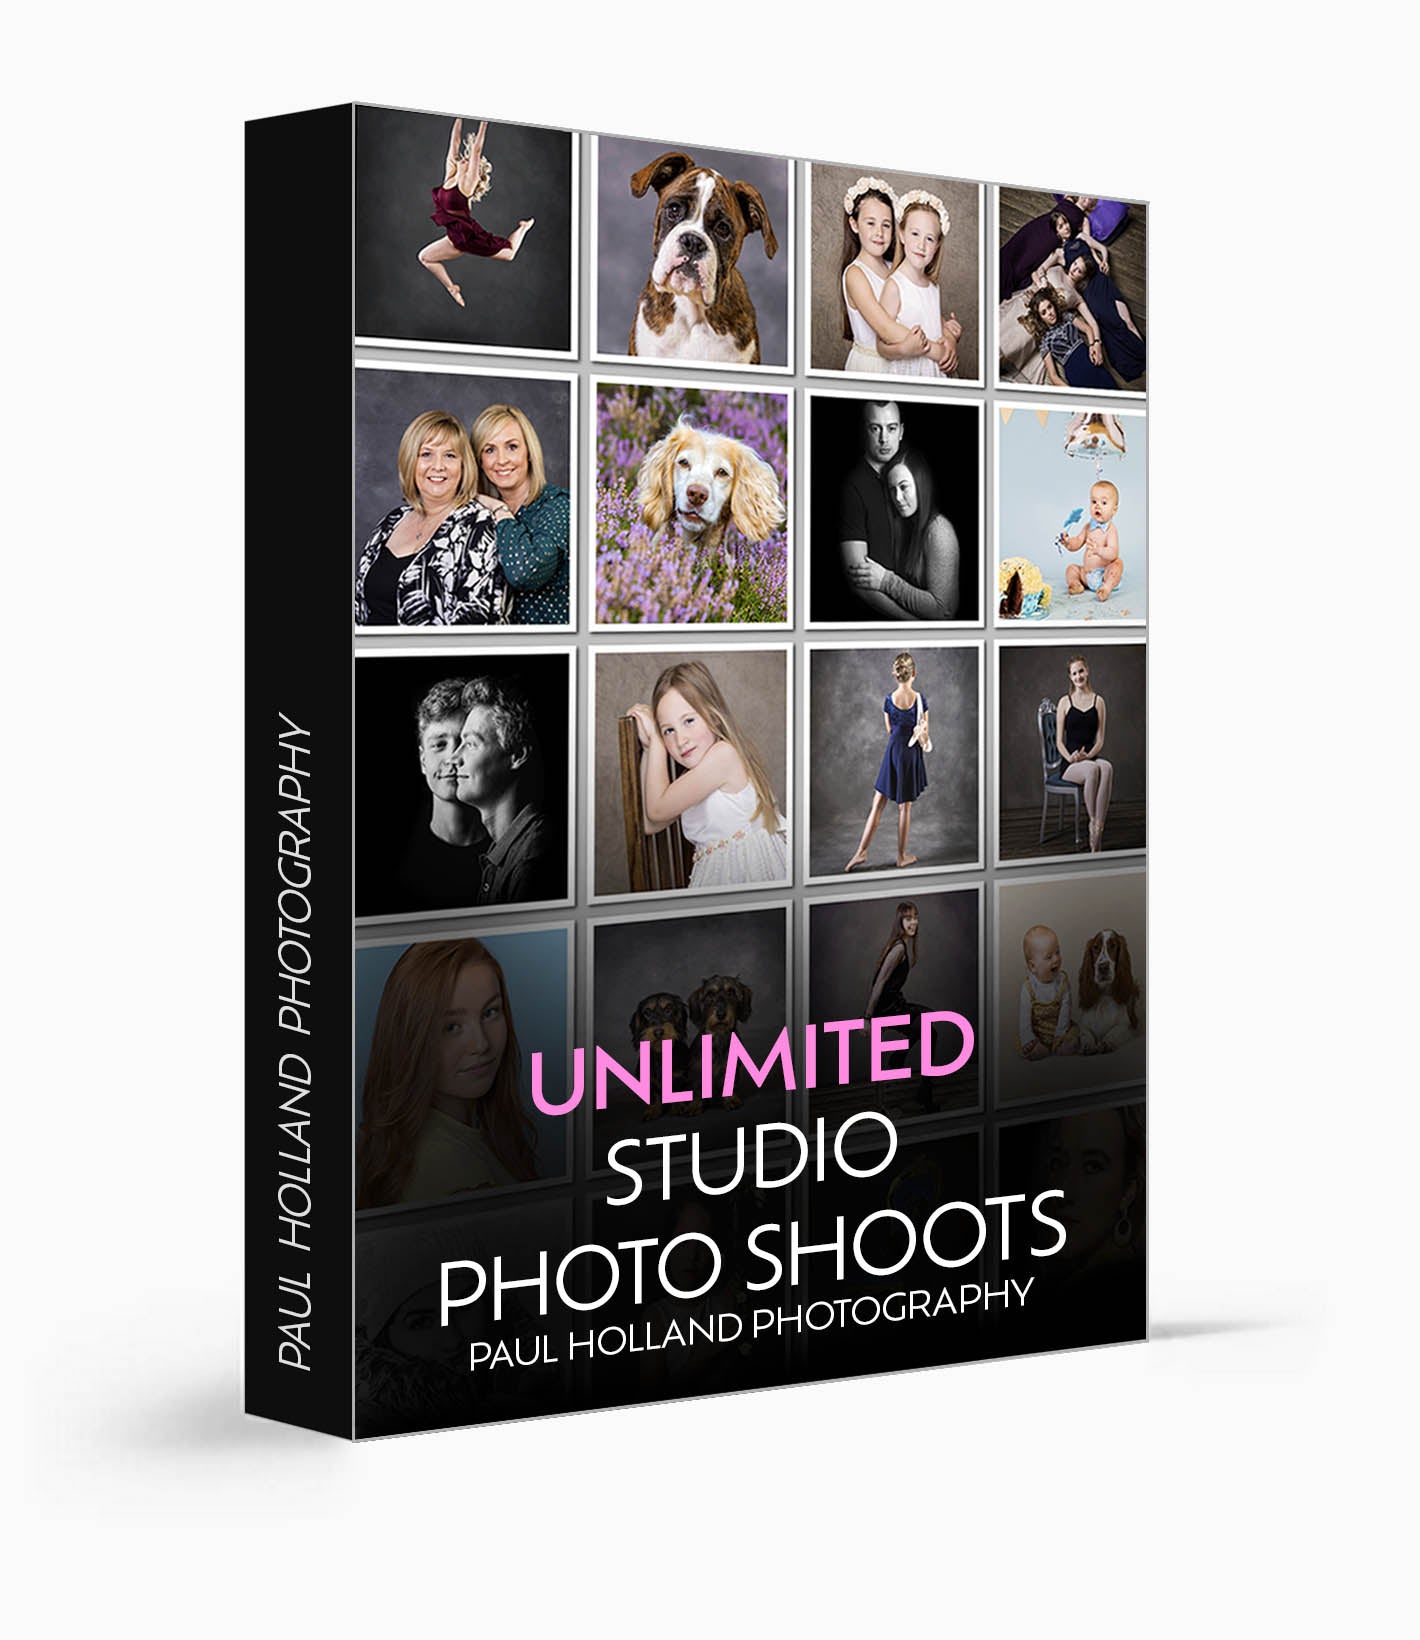 Studio Mini Passport - UNLIMITED Studio Photo Shoots for 6 months!